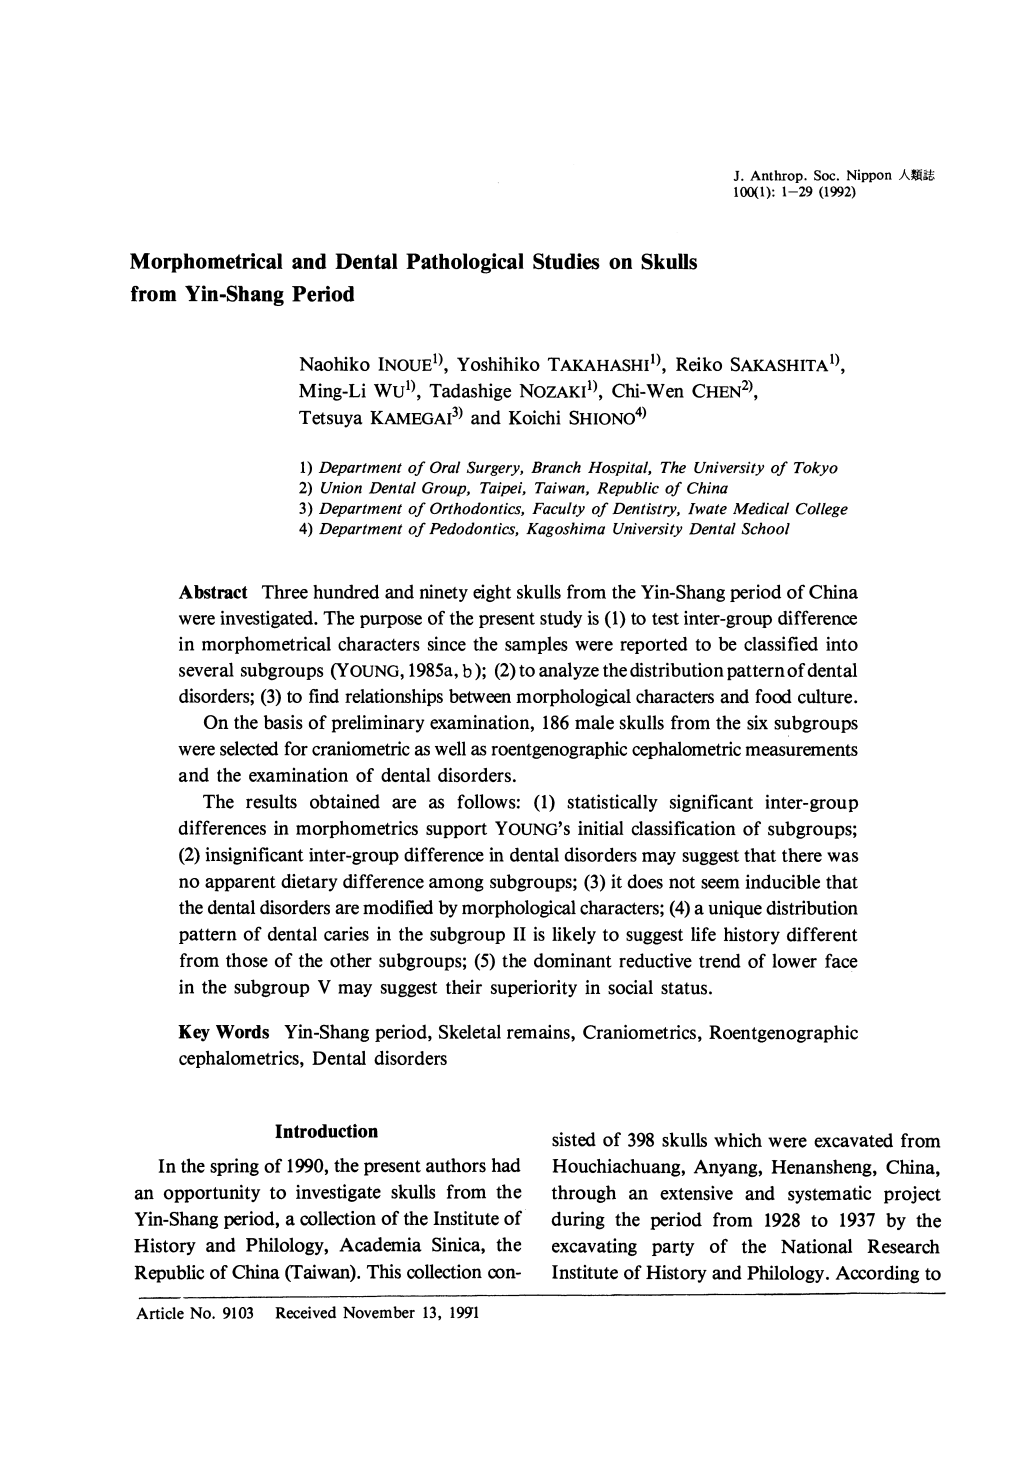 Morphometrical and Dental Pathological Studies on Skulls from Yin-Shang Period